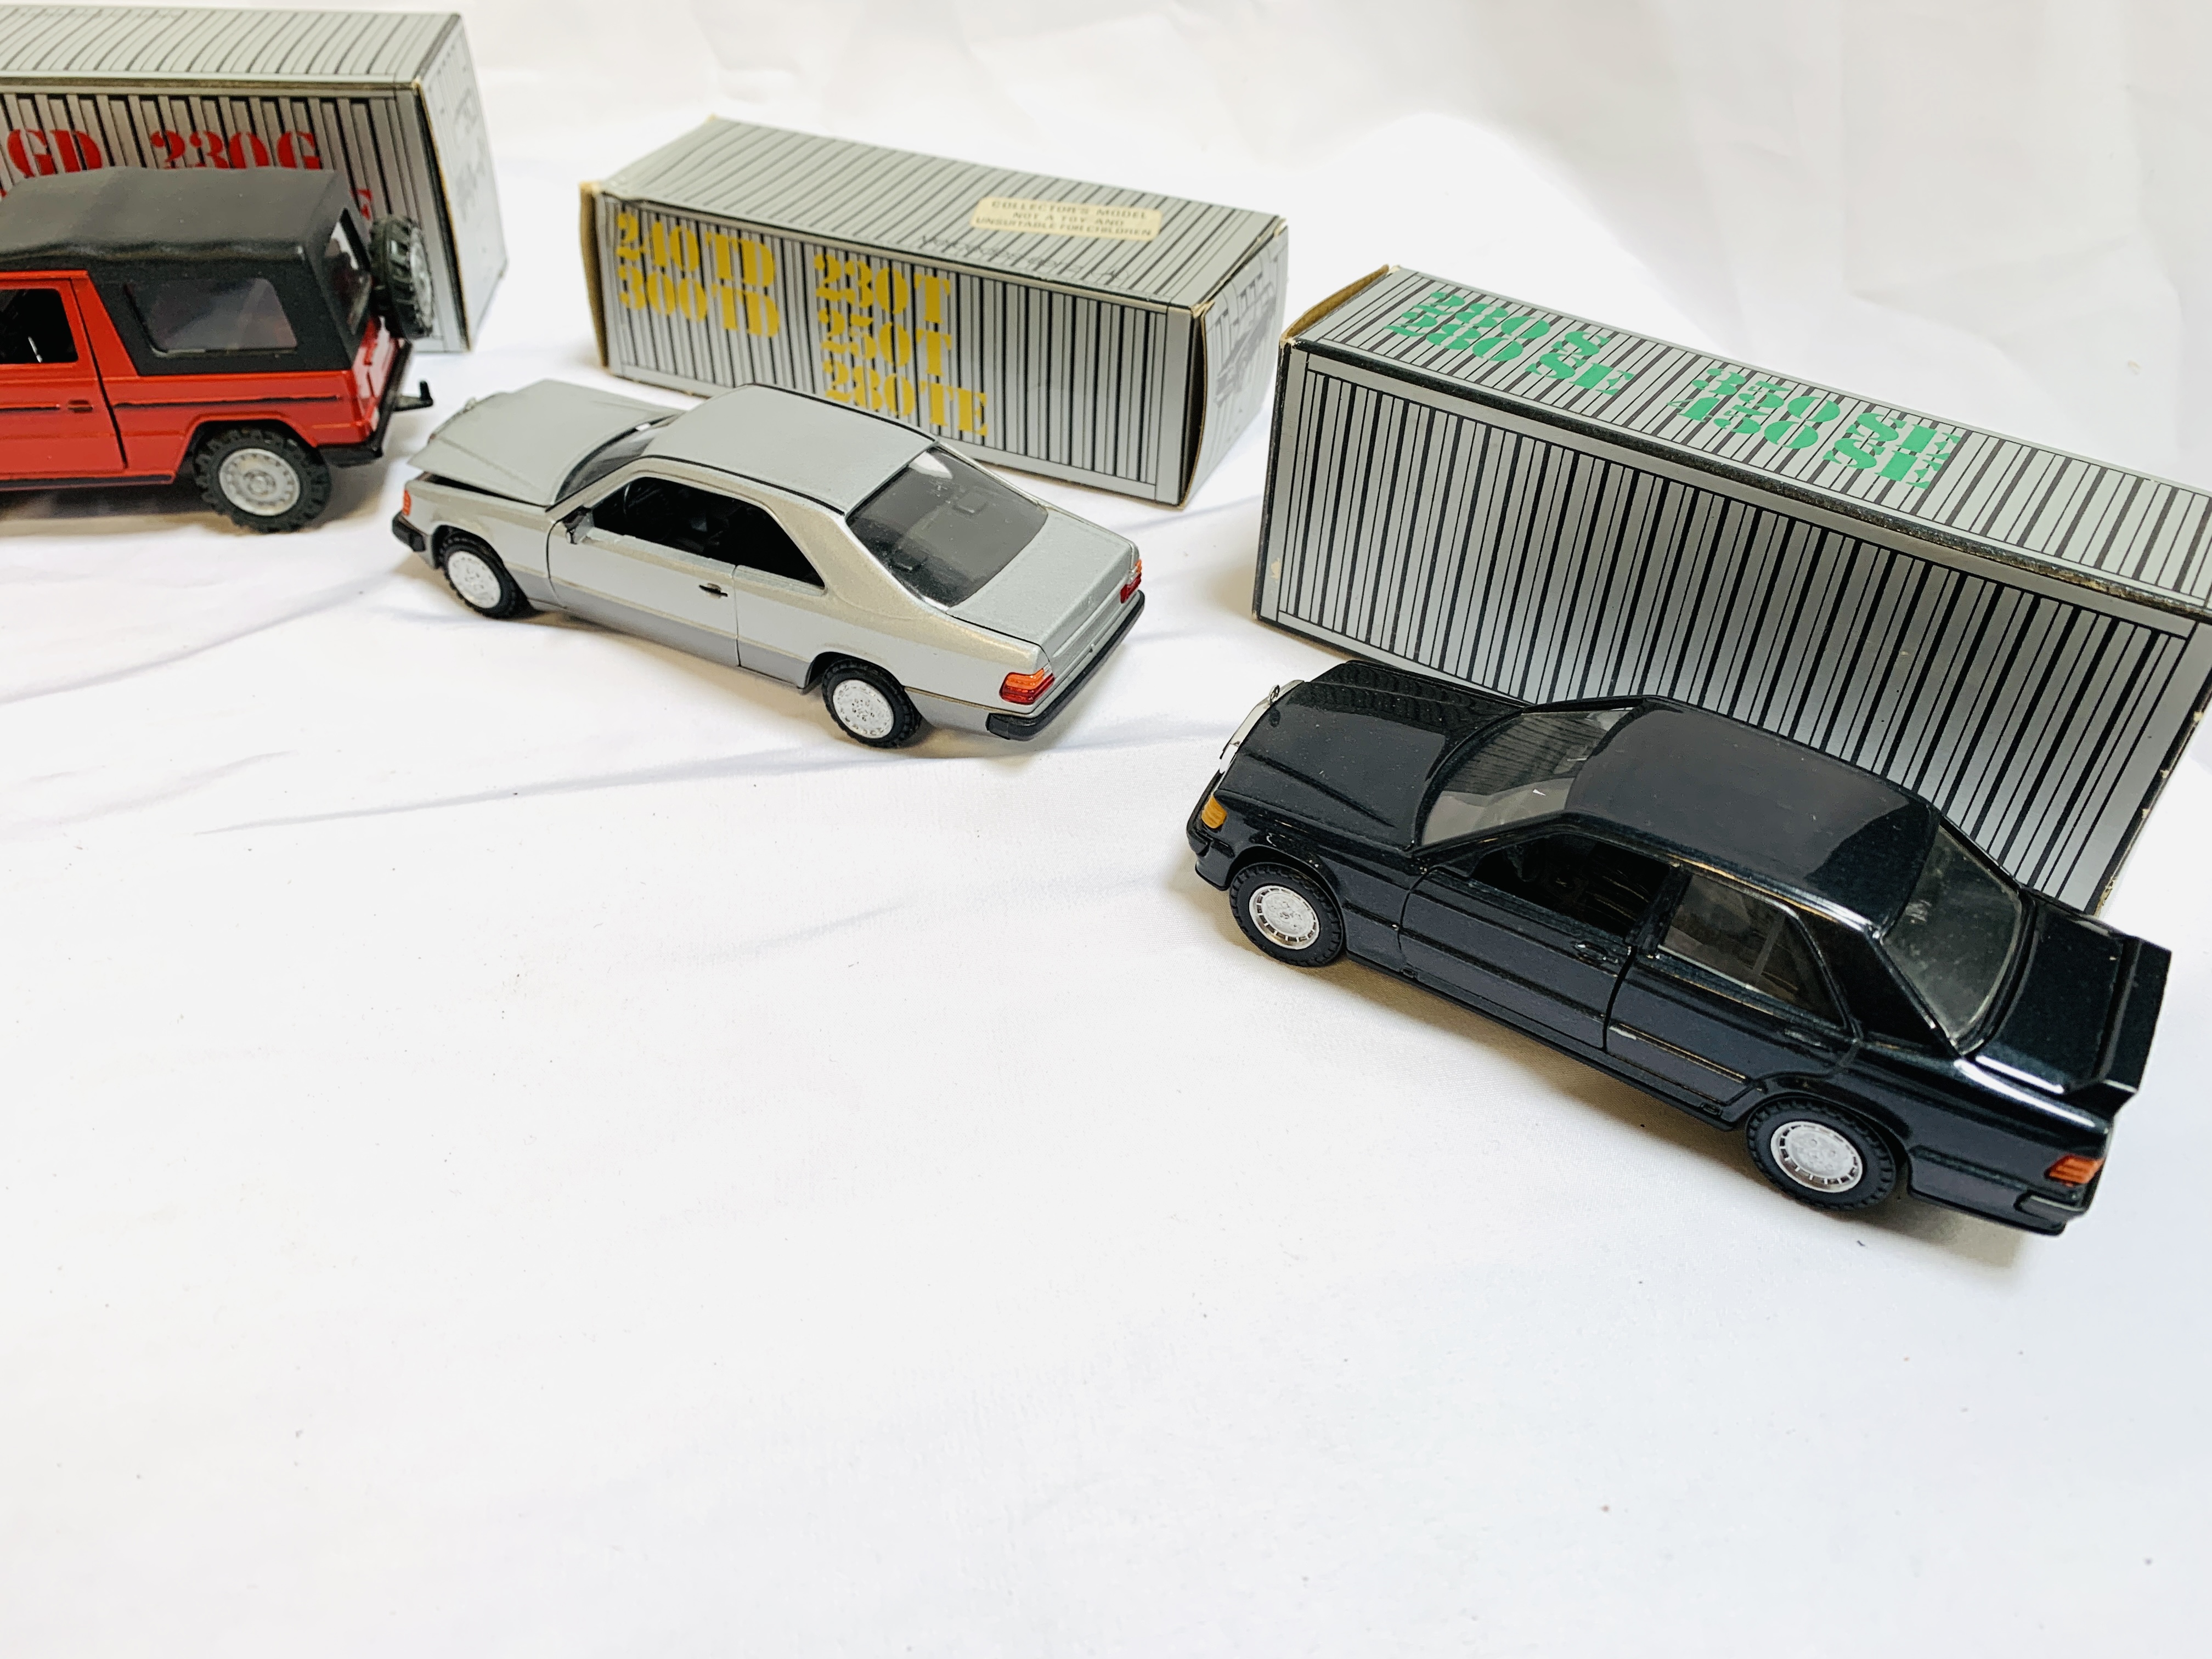 Seven Cursor-modell Mercedes Benz vehicles - Image 4 of 6